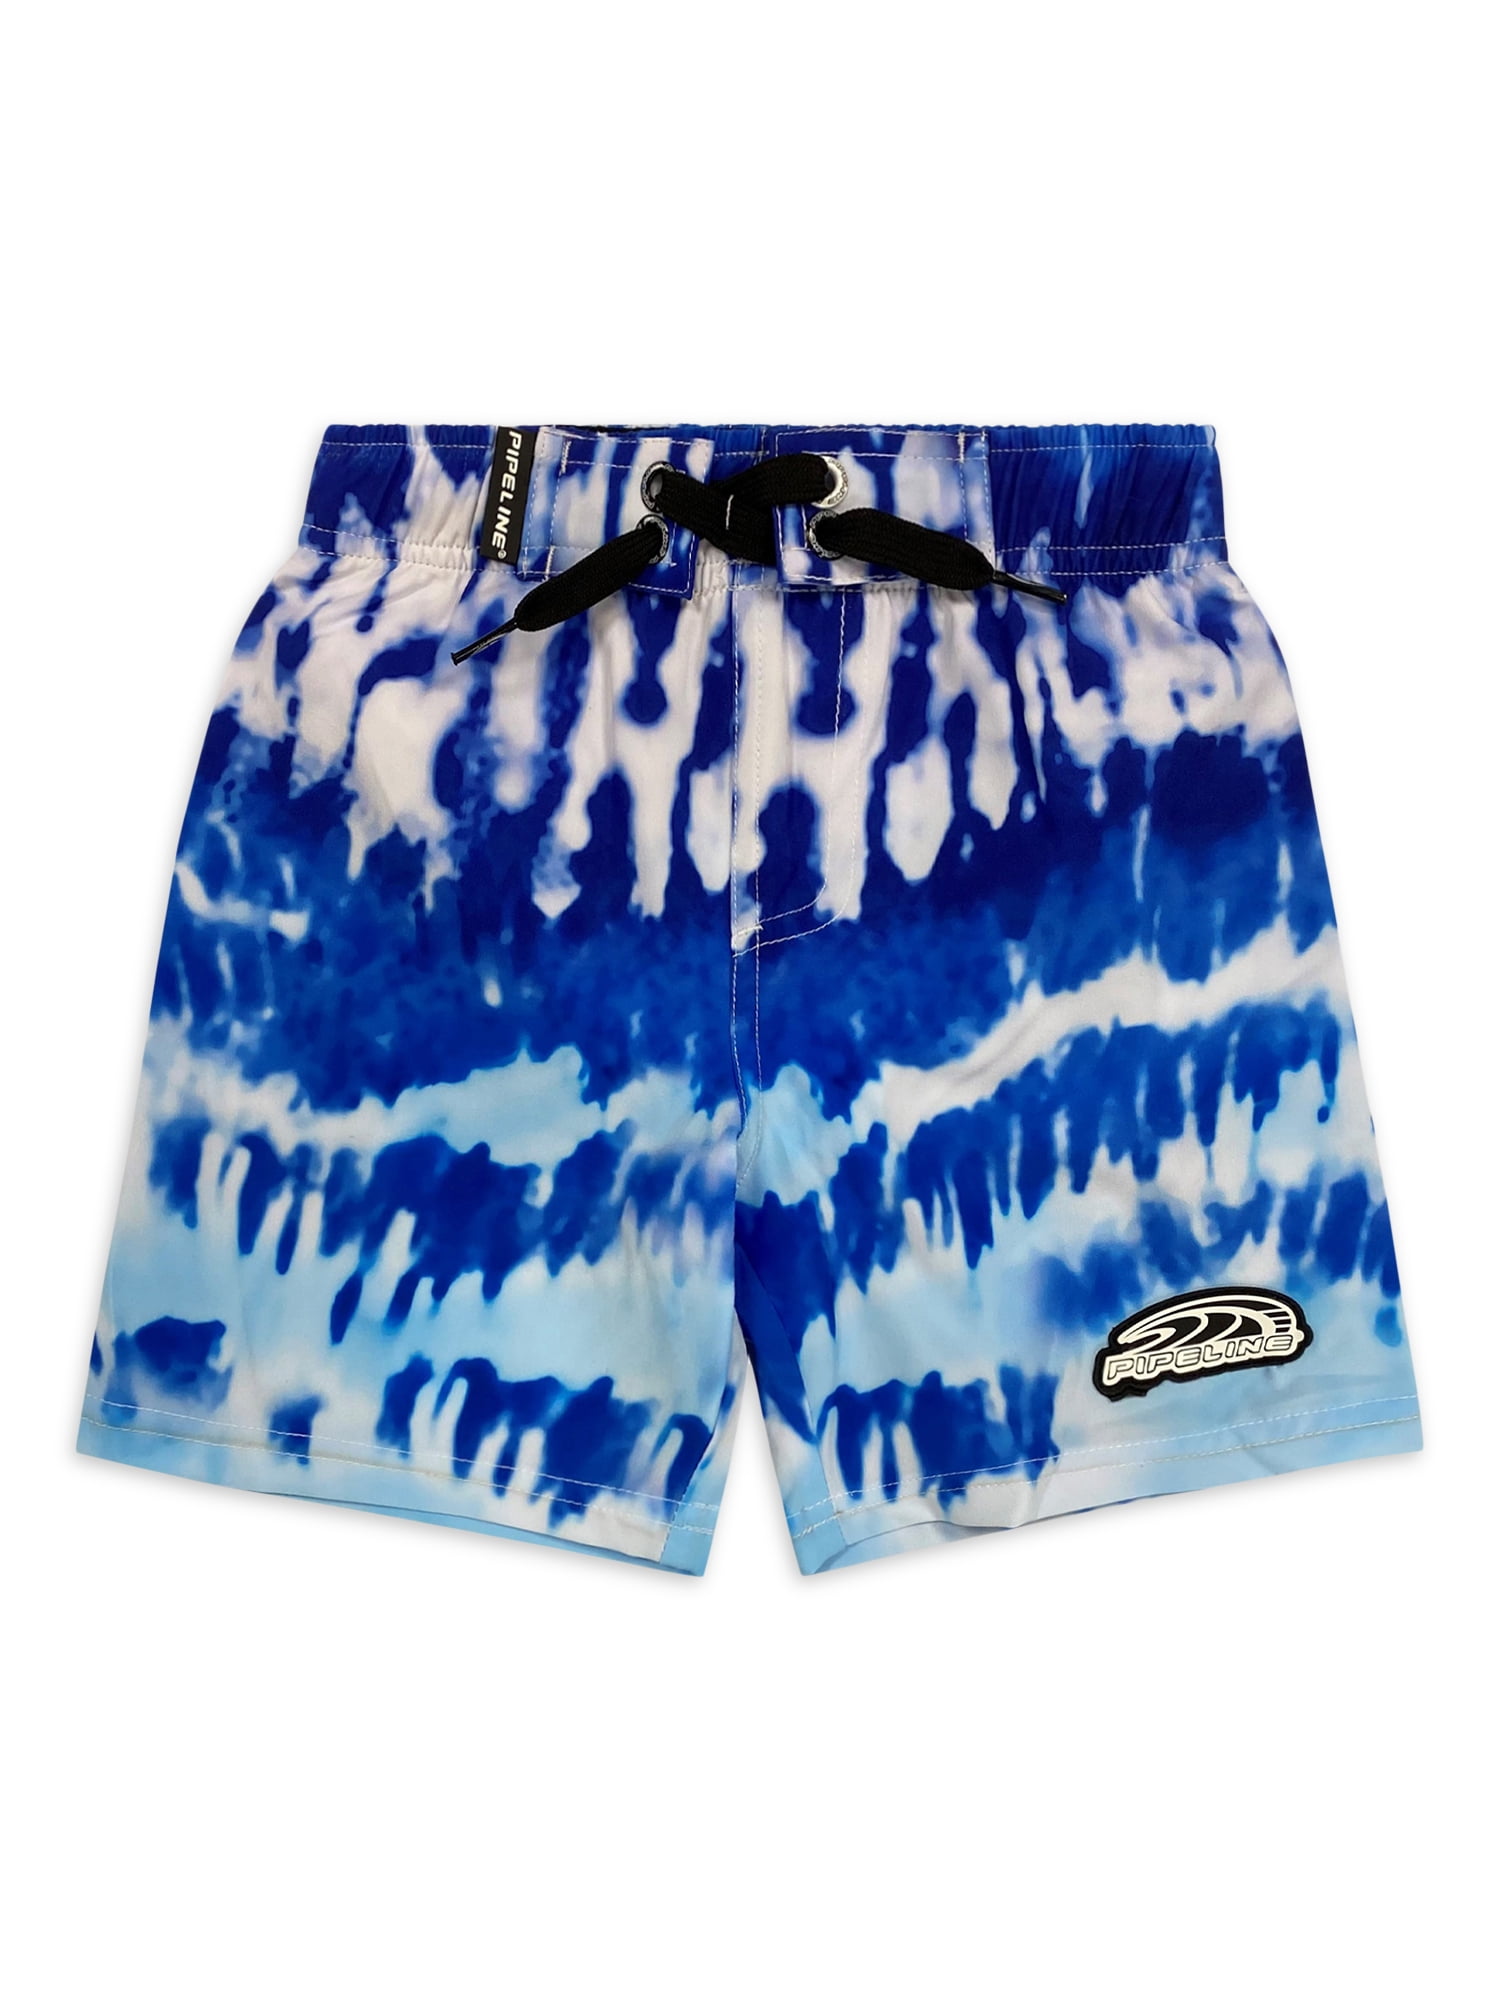 Men Swim Trunks Summer Cool Quick Dry Board Shorts Suit with Cloud Photo Men